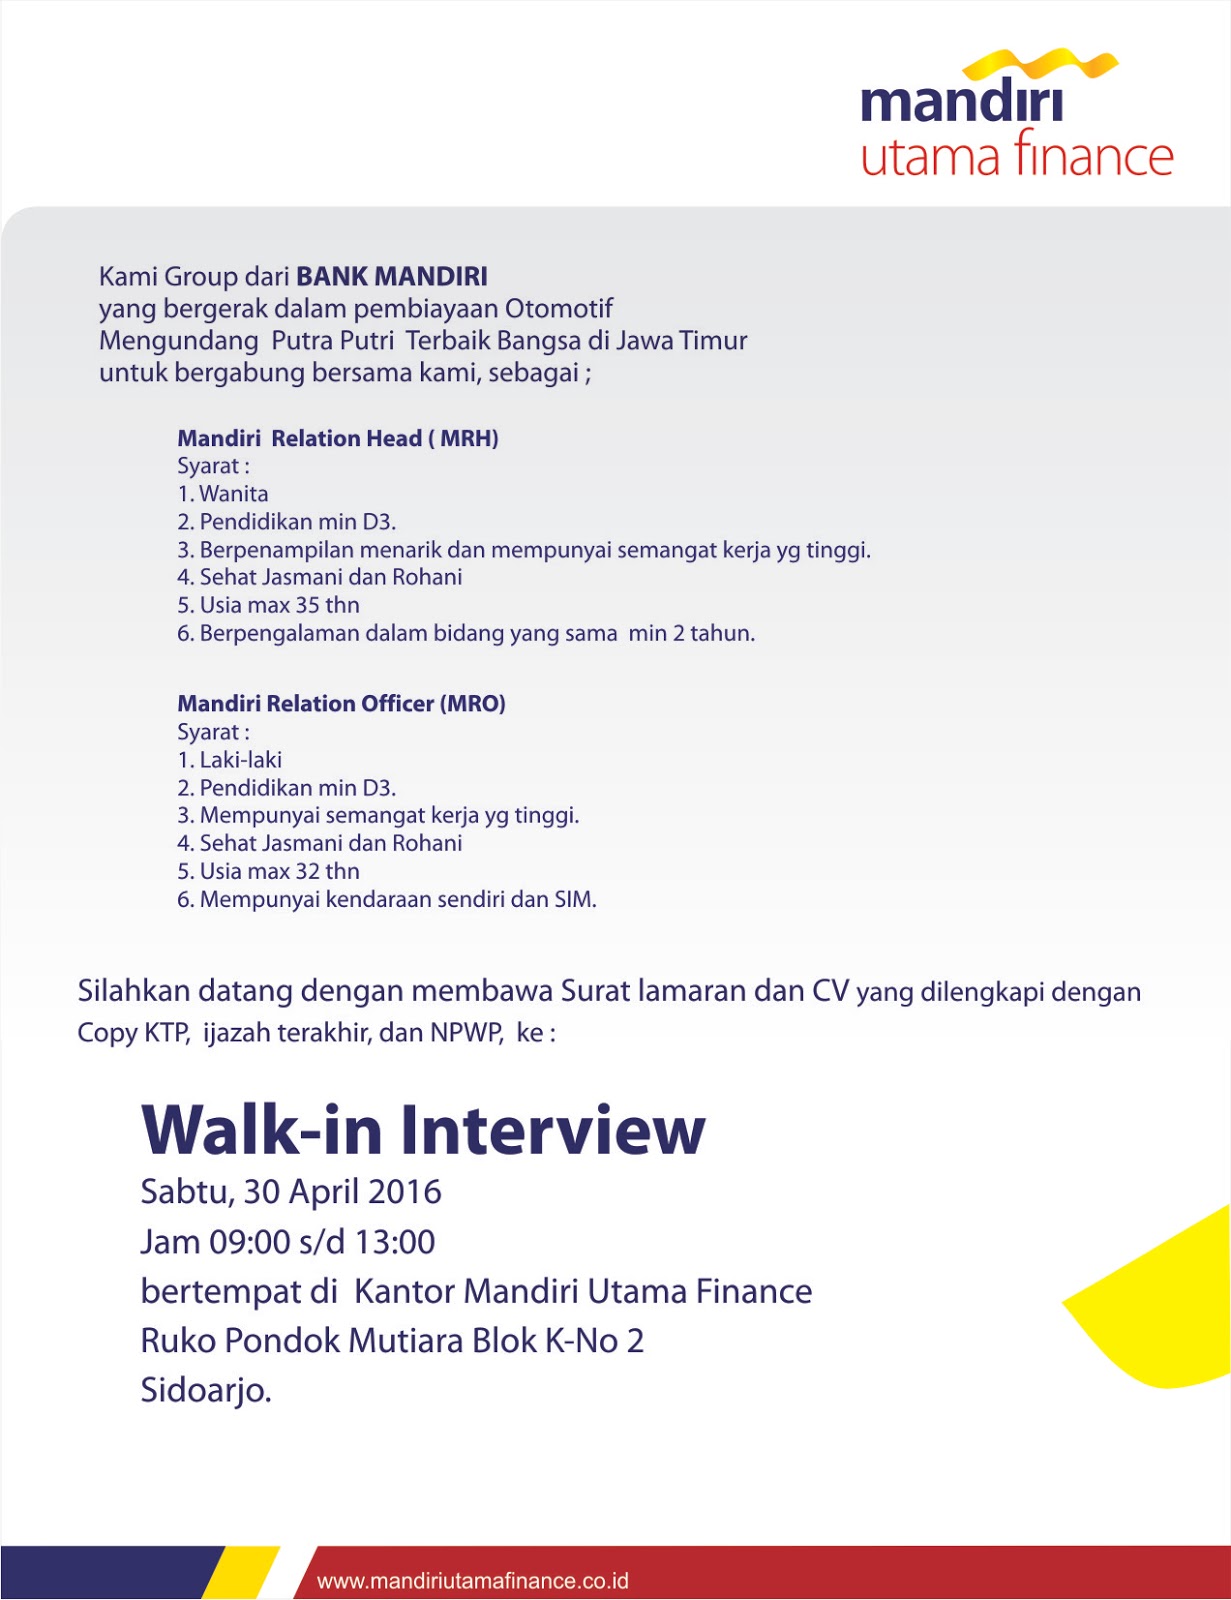 Walk In Interview di Mandiri Utama Finance - Sidoarjo 